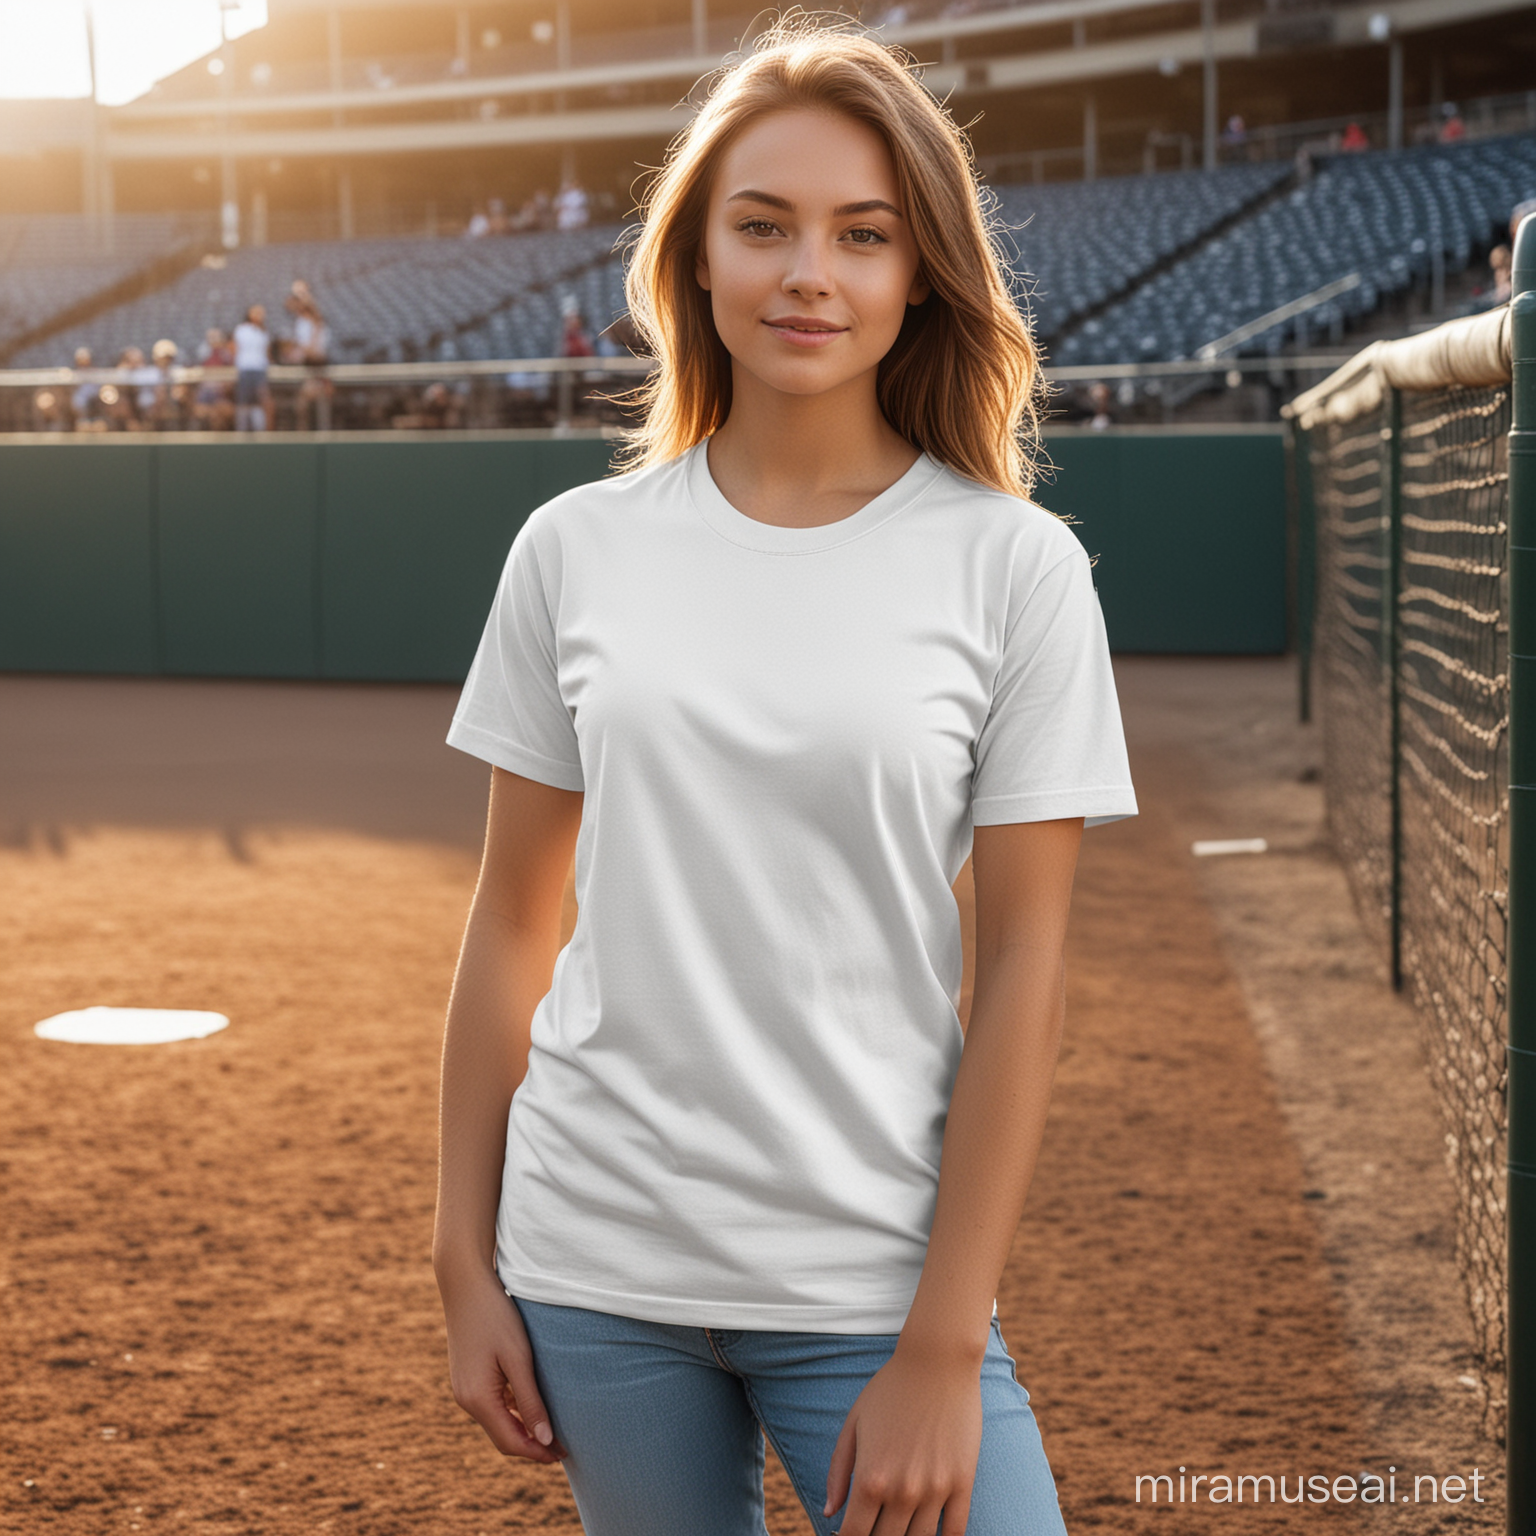 Serene Baseball Field Girl Wearing LogoFree White Gildan 64000 Tshirt